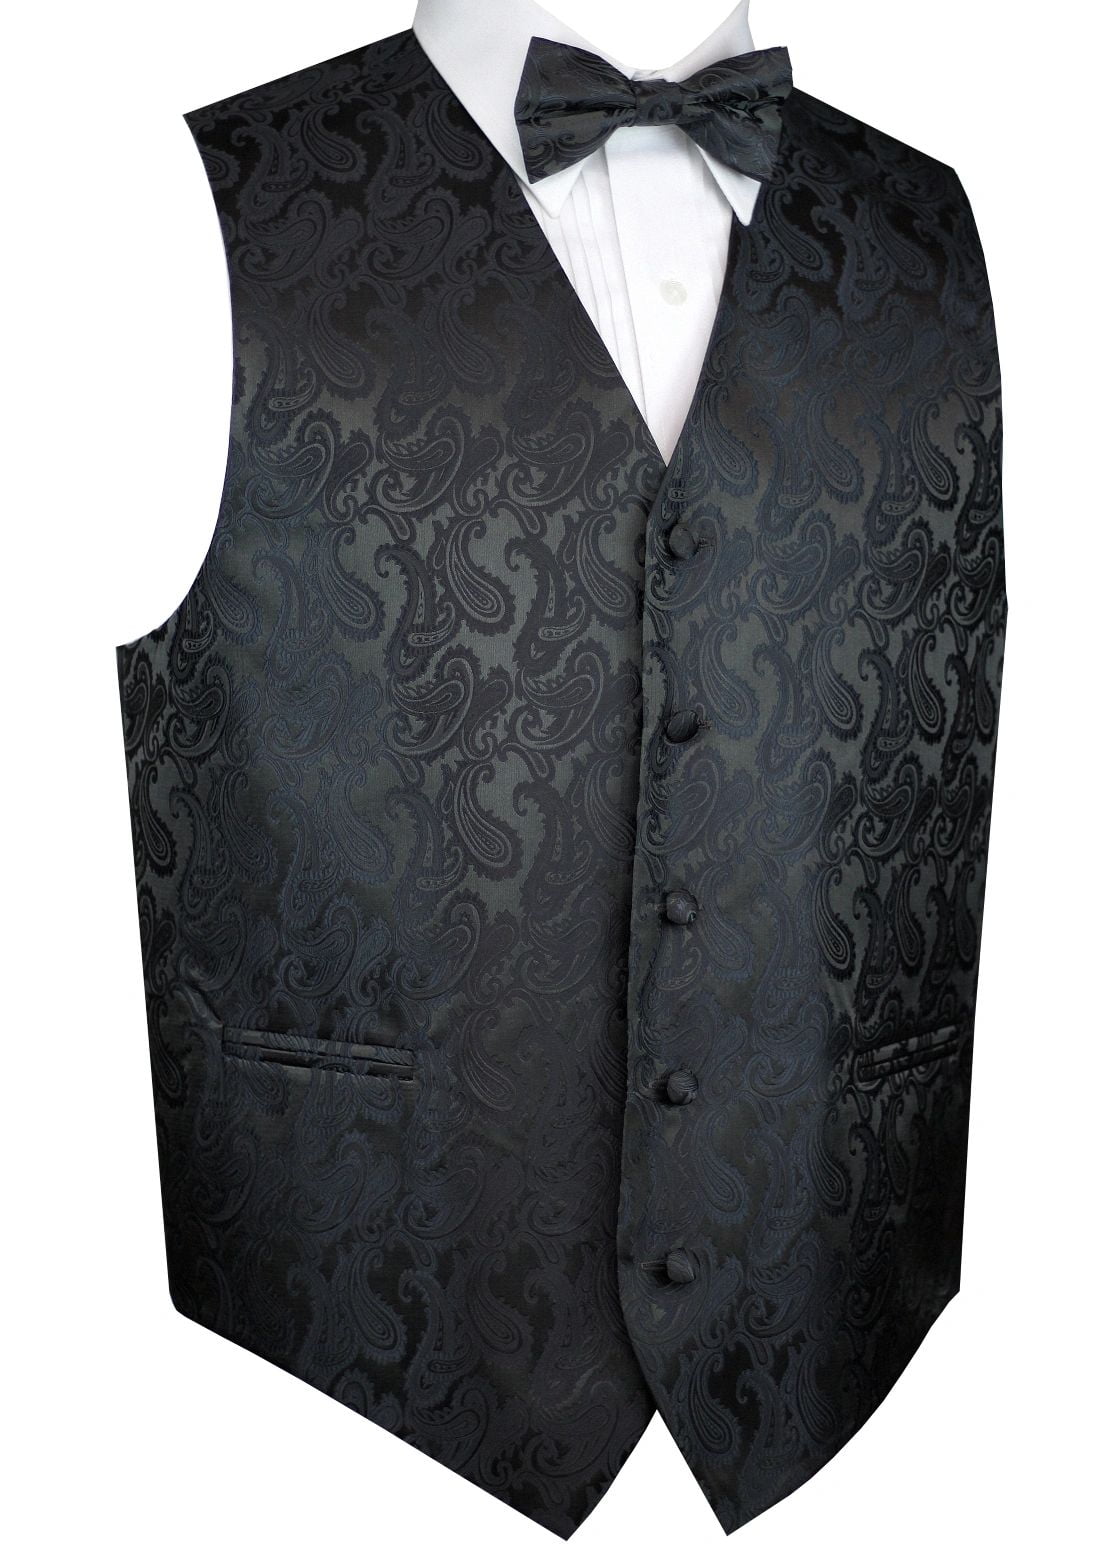 New formal Men's micro fiber pretied bow tie & hankie set paisley black wedding 